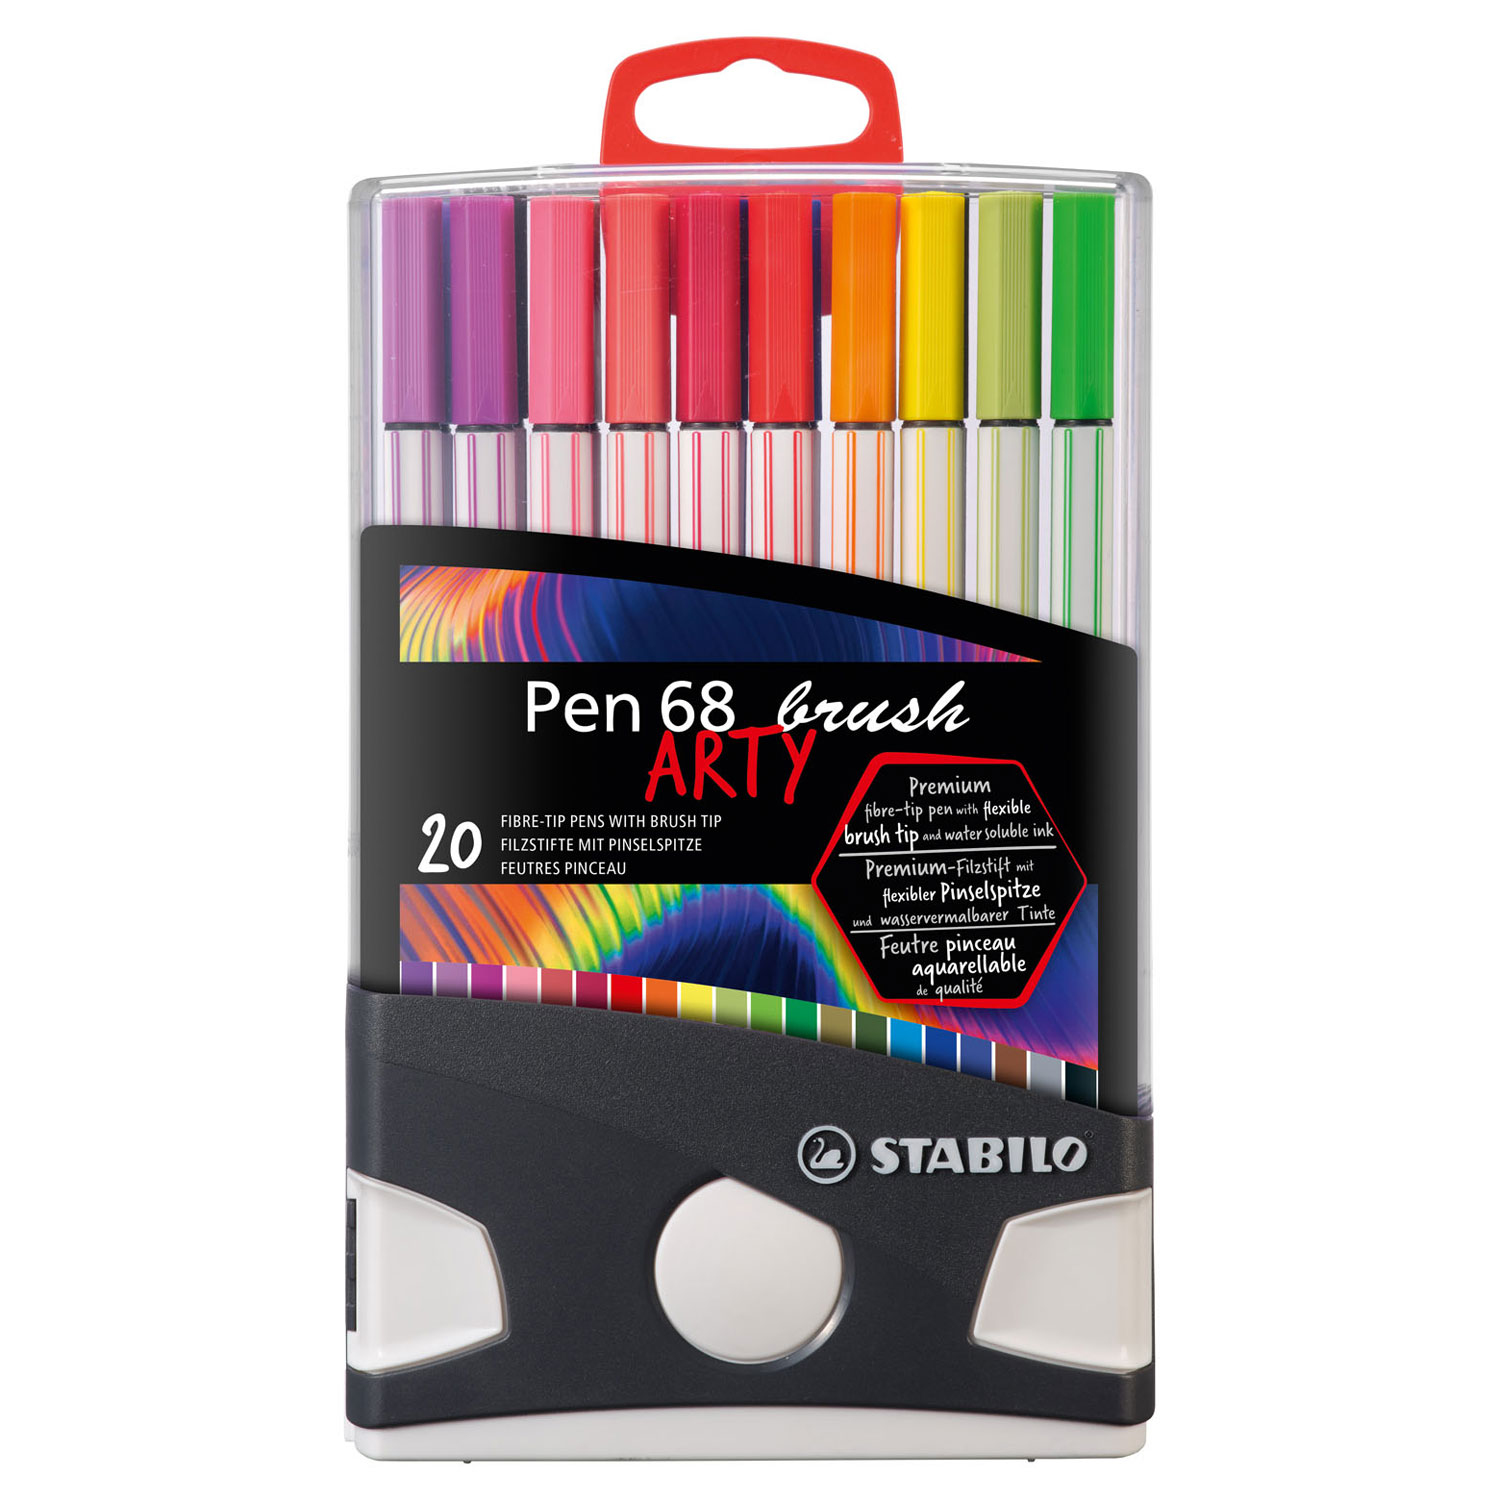 STABILO Pen 68 Brush ARTY ColorParade, 20st.